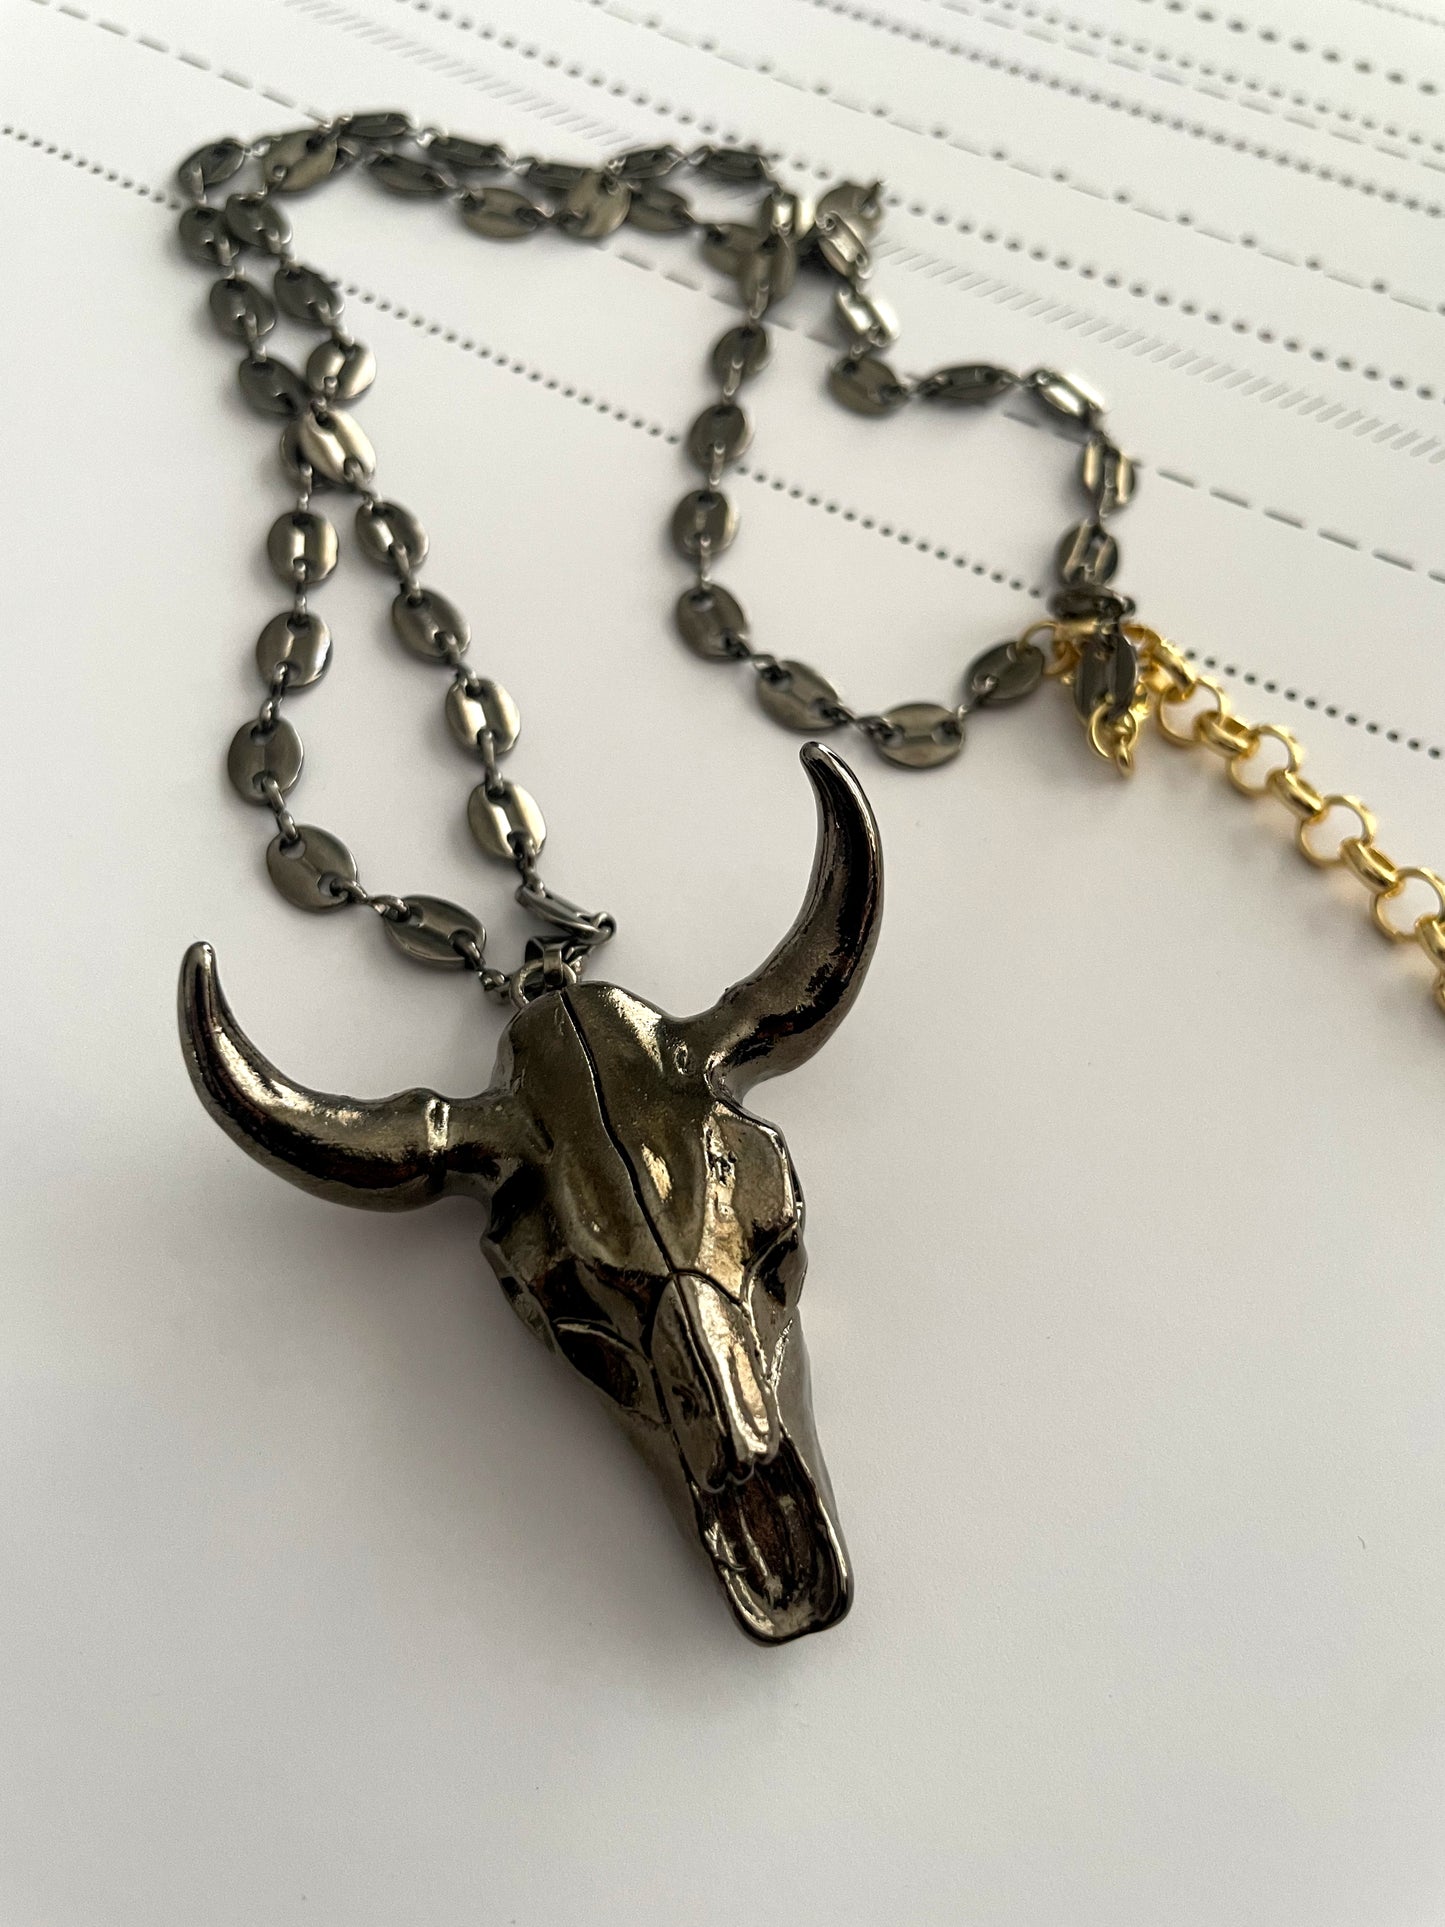 Rhodium Bull pendant long necklace